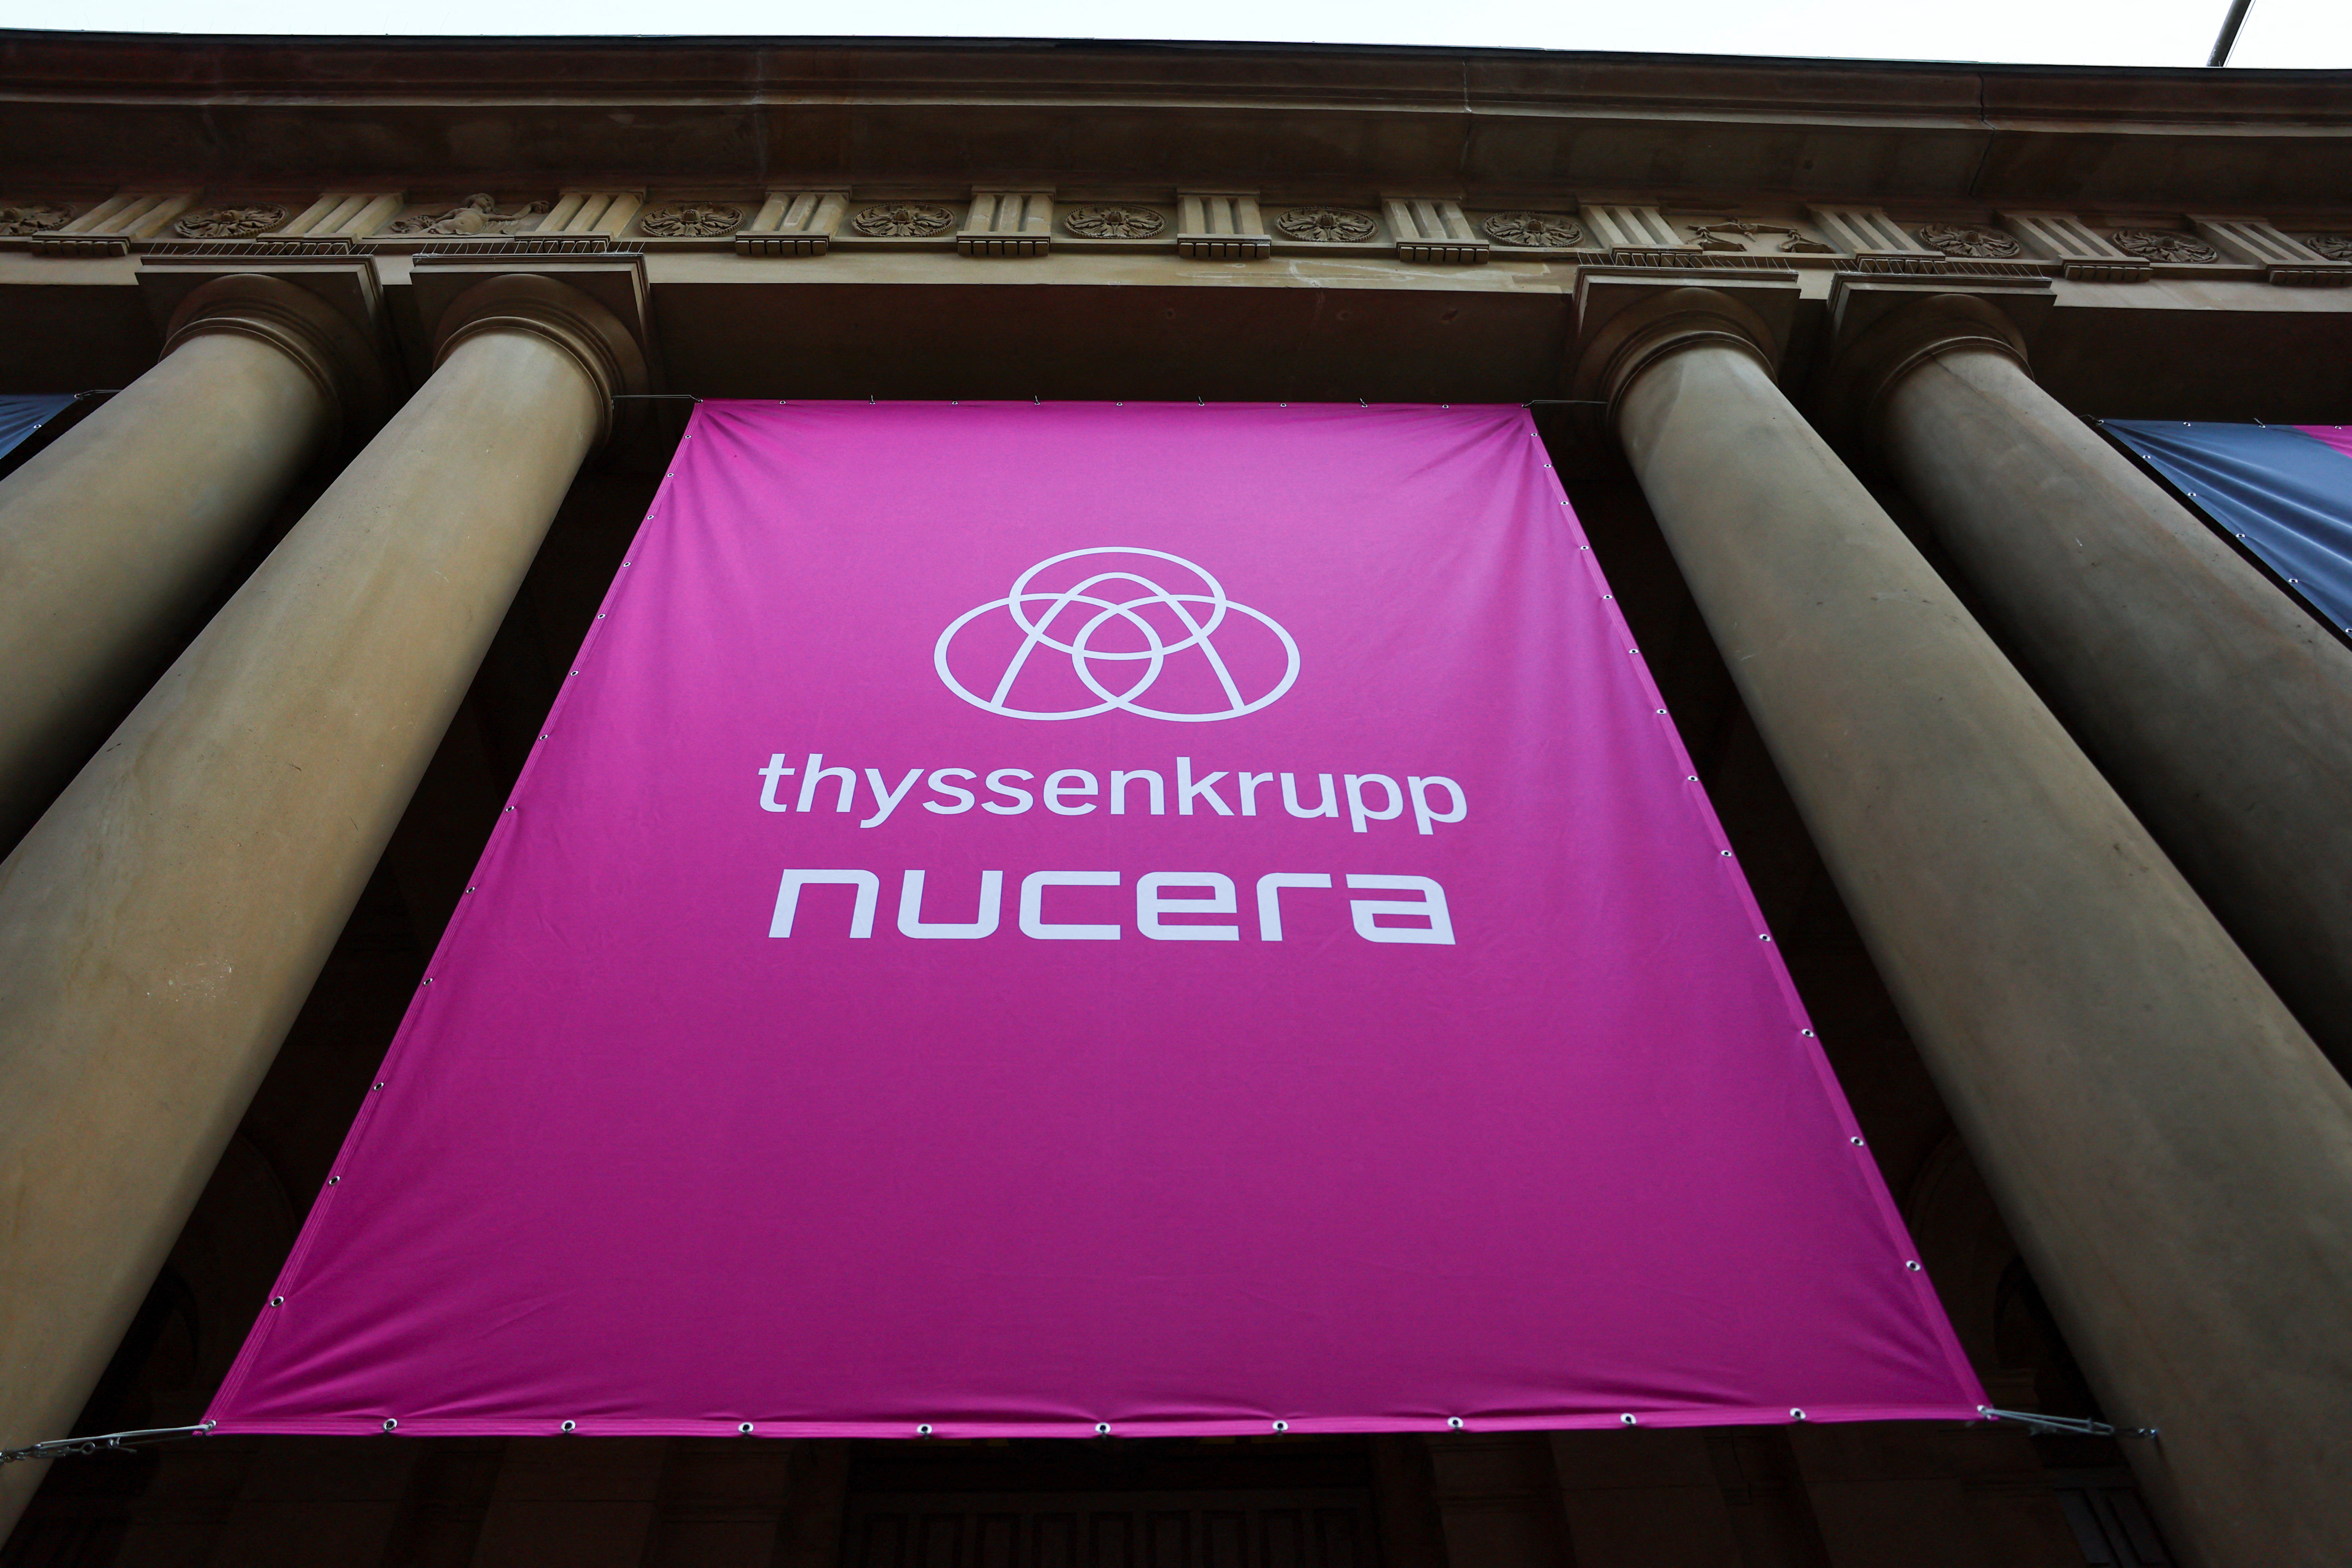 Thyssenkrupp Nucera stock market debut in Frankfurt